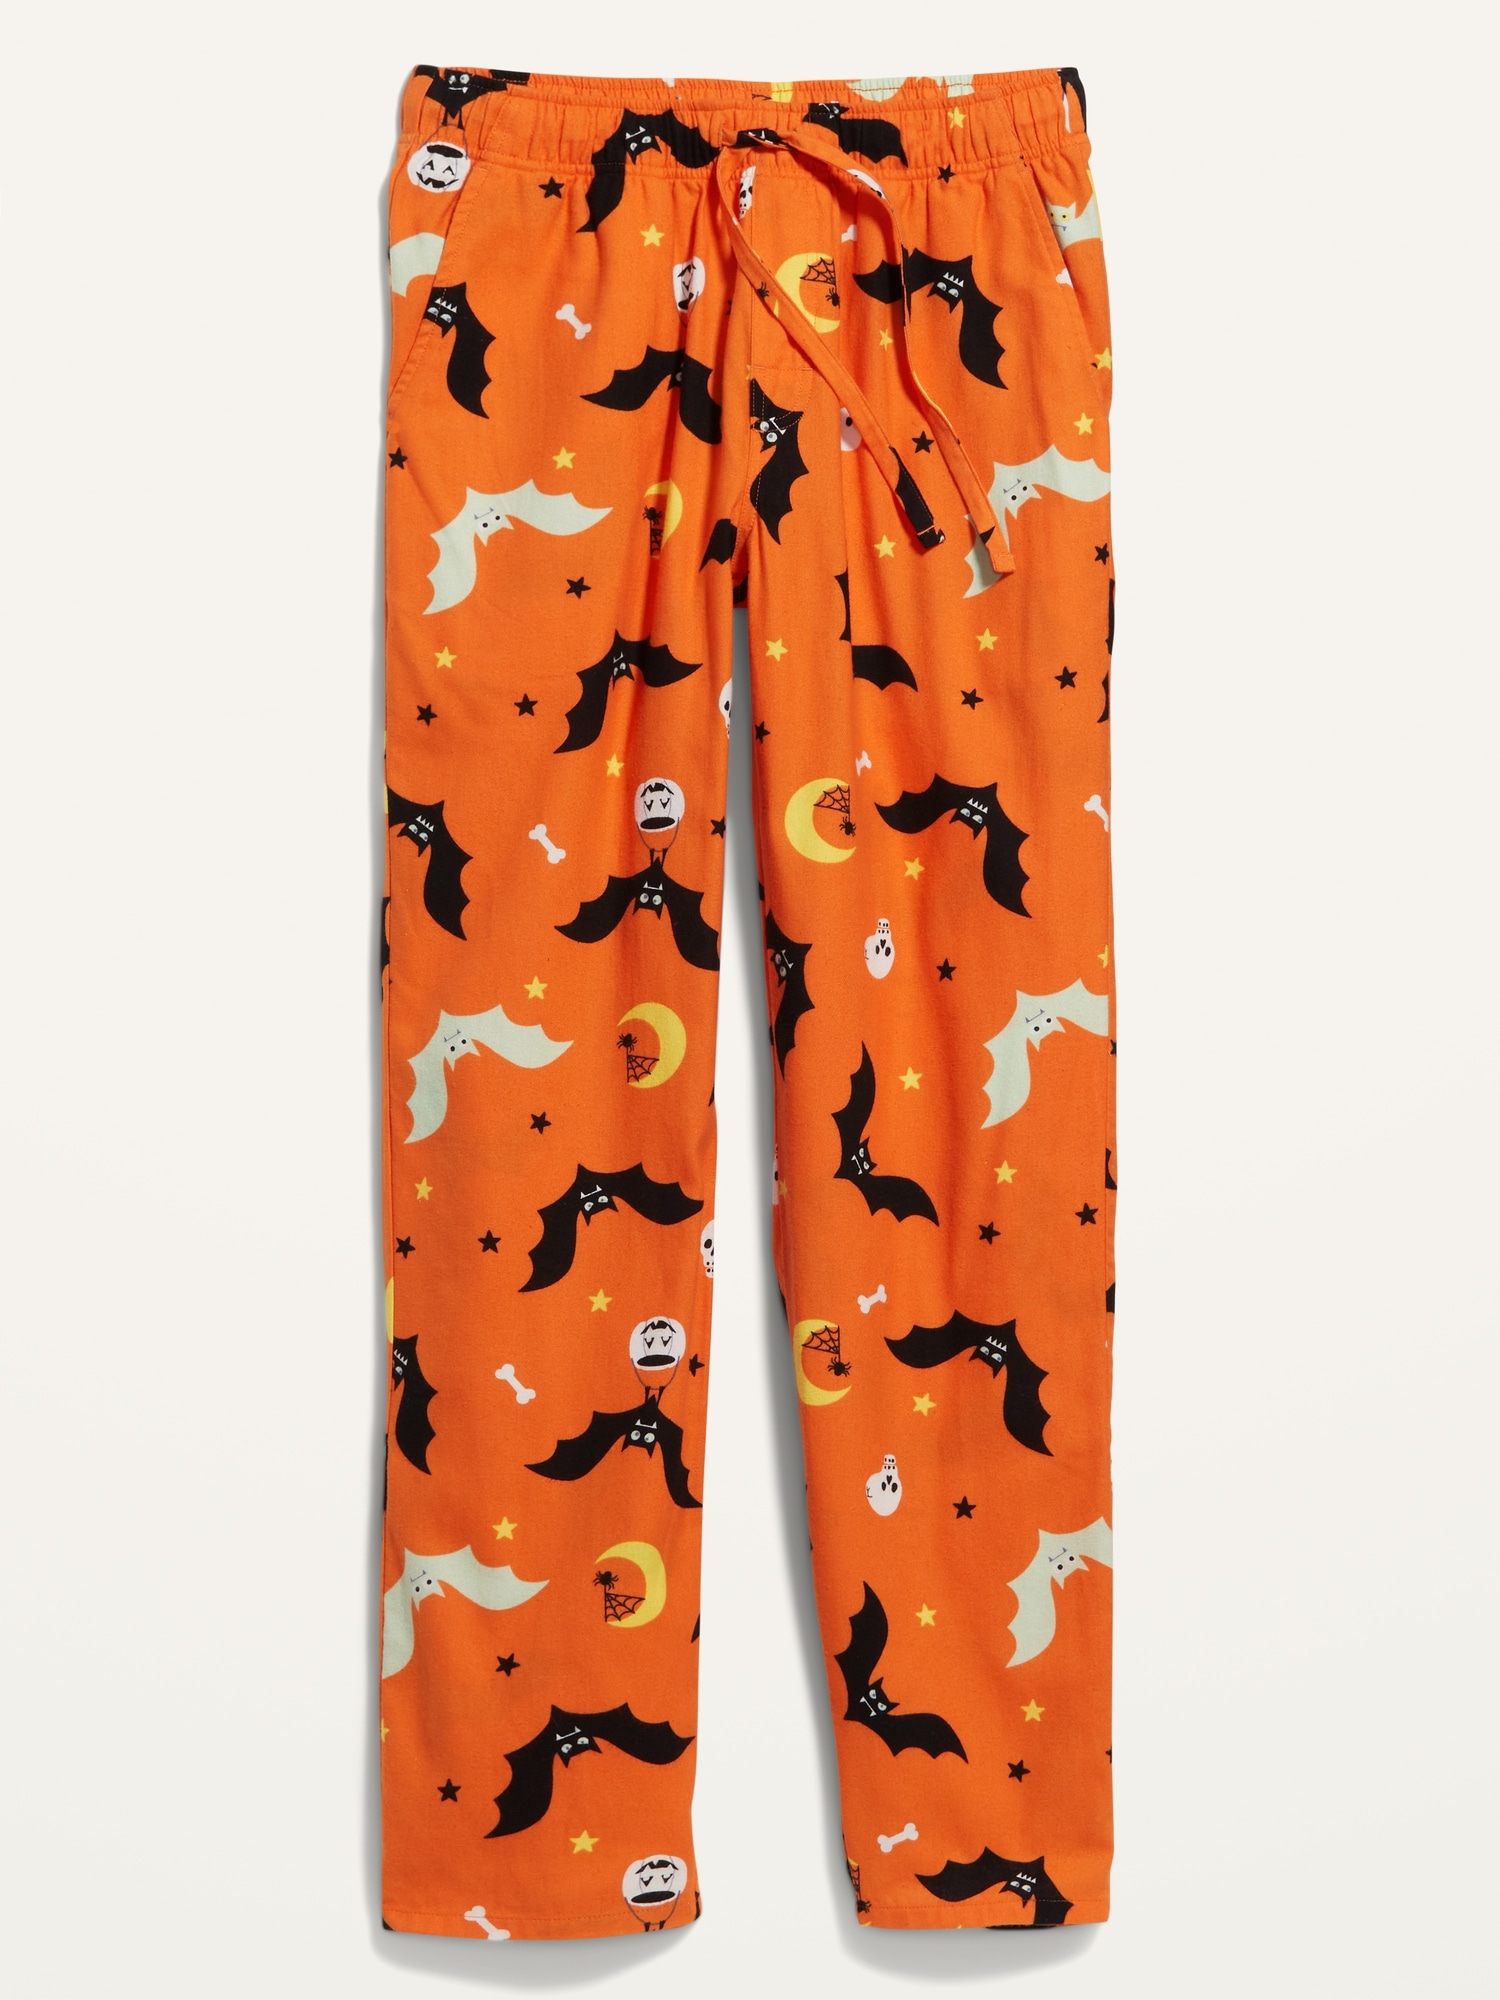 Matching Halloween Flannel Pajama Pants, Old Navy